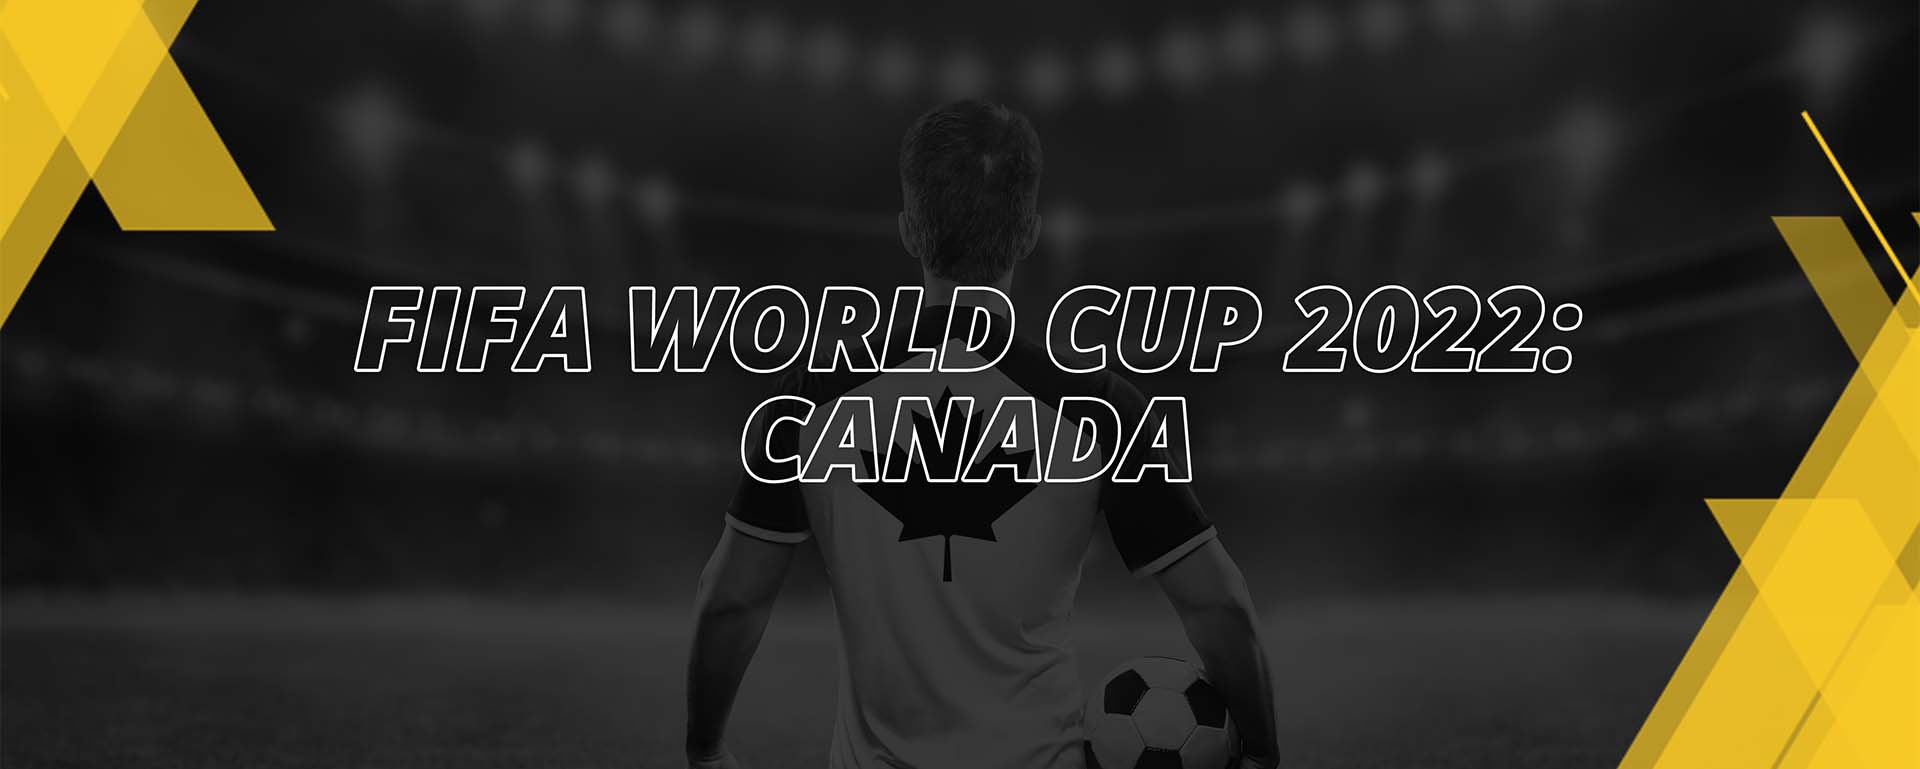 CANADA – FIFA WORLD CUP QATAR 2022 – FAN’S COMPENDIUM